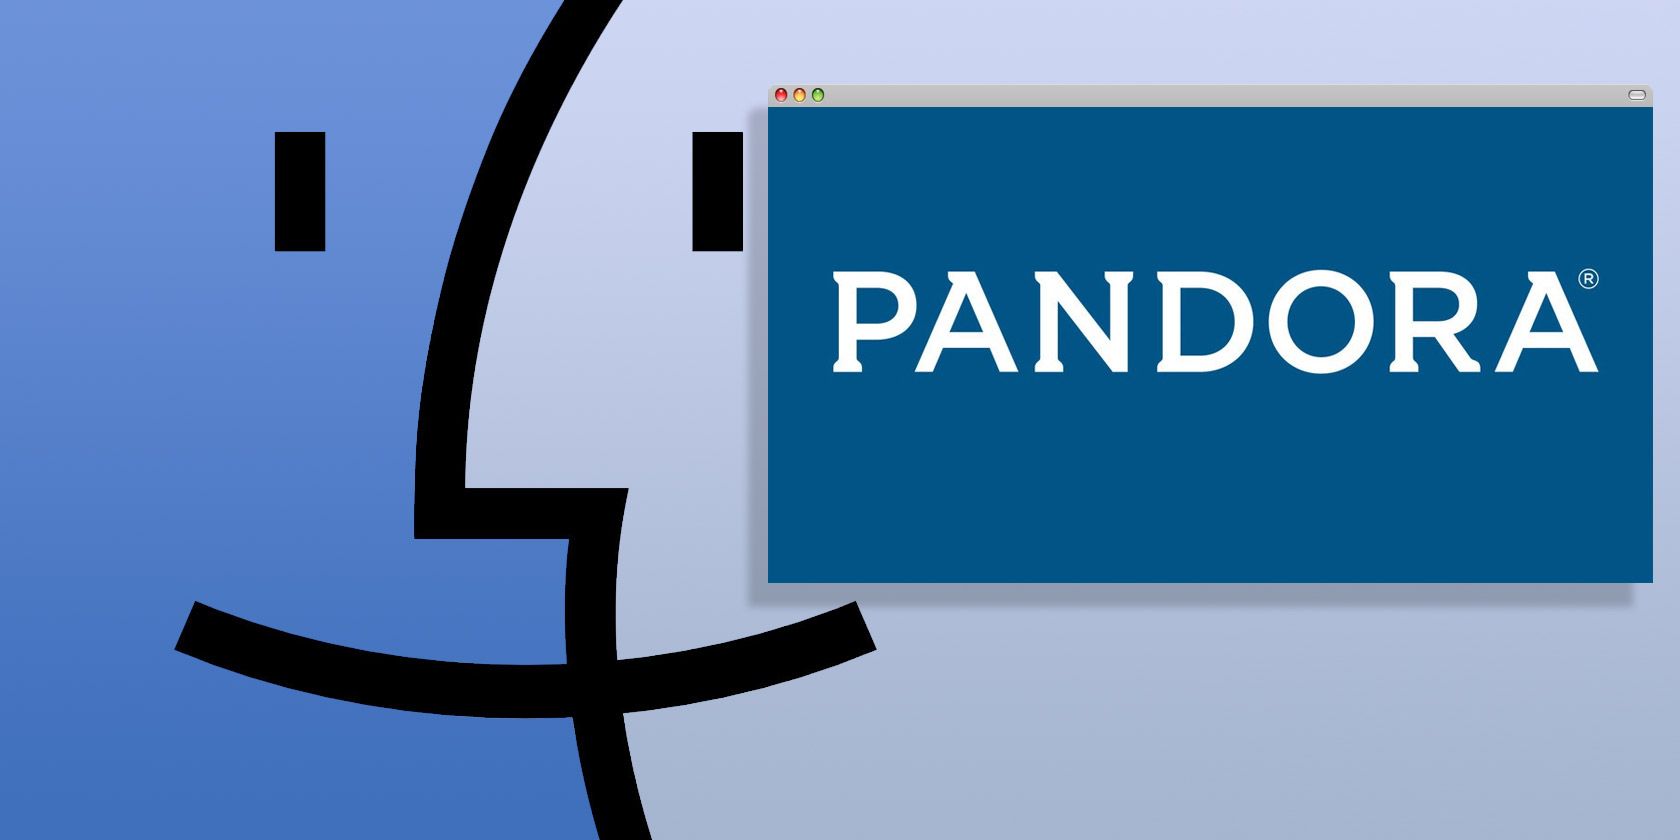 can you download pandora on mac